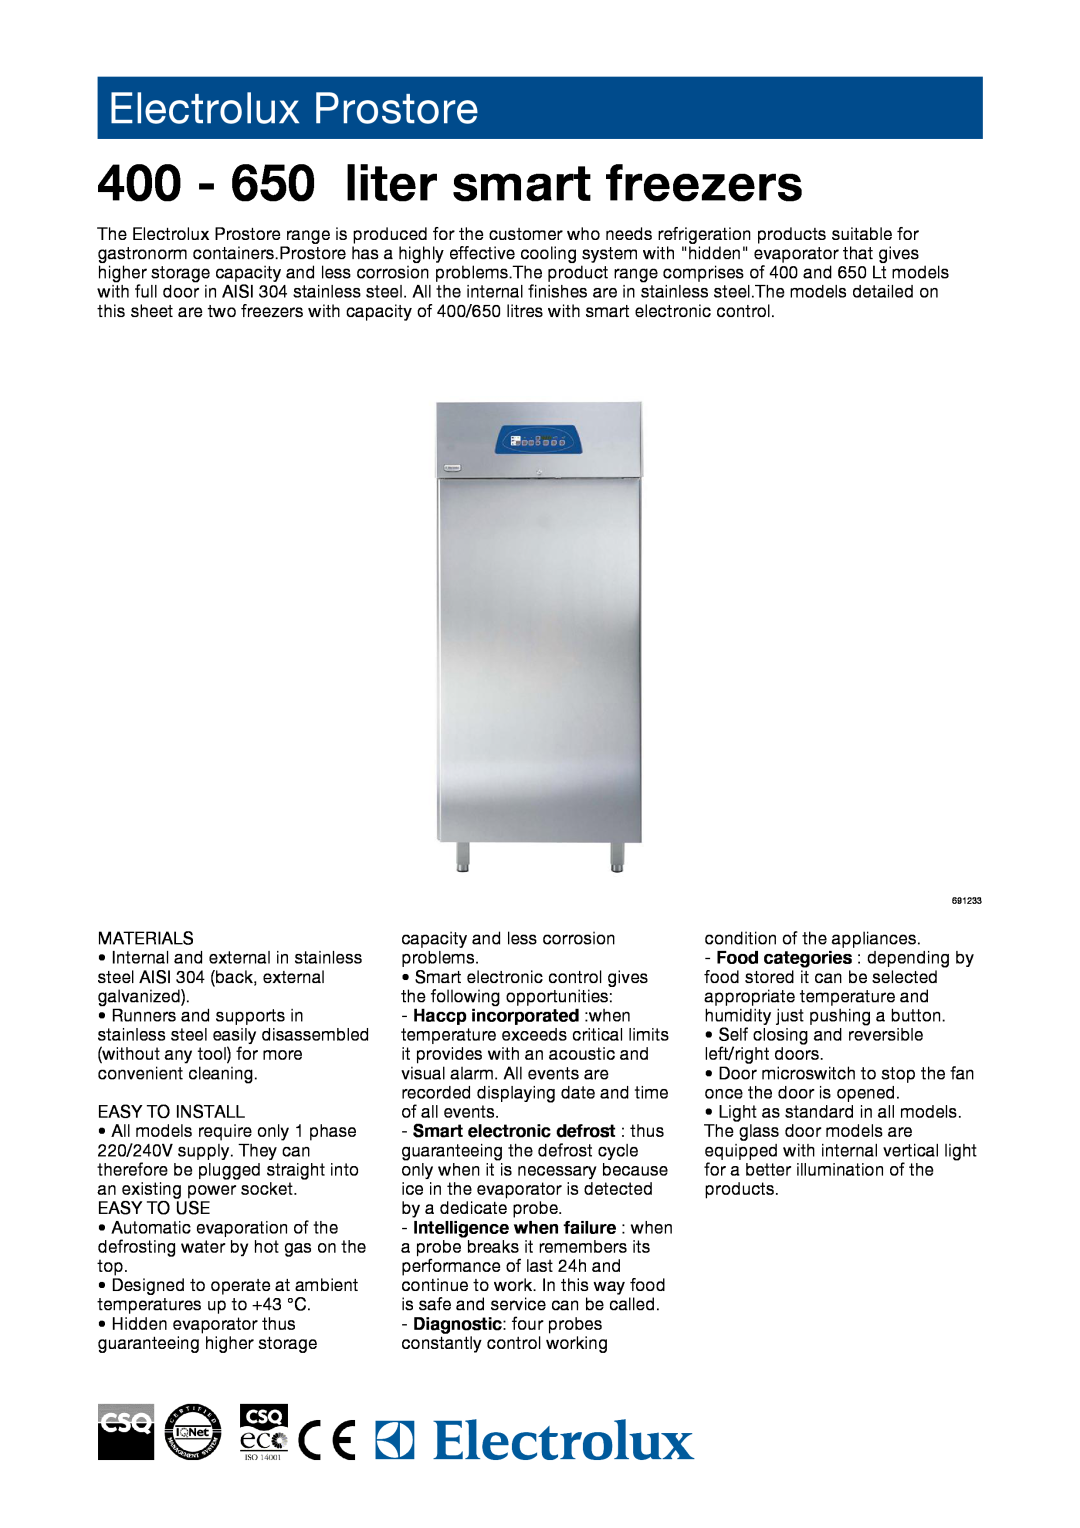 Electrolux PR06FE1F, PR04FE1F, 691233, 691234 manual 400 - 650 liter smart freezers, Electrolux Prostore 